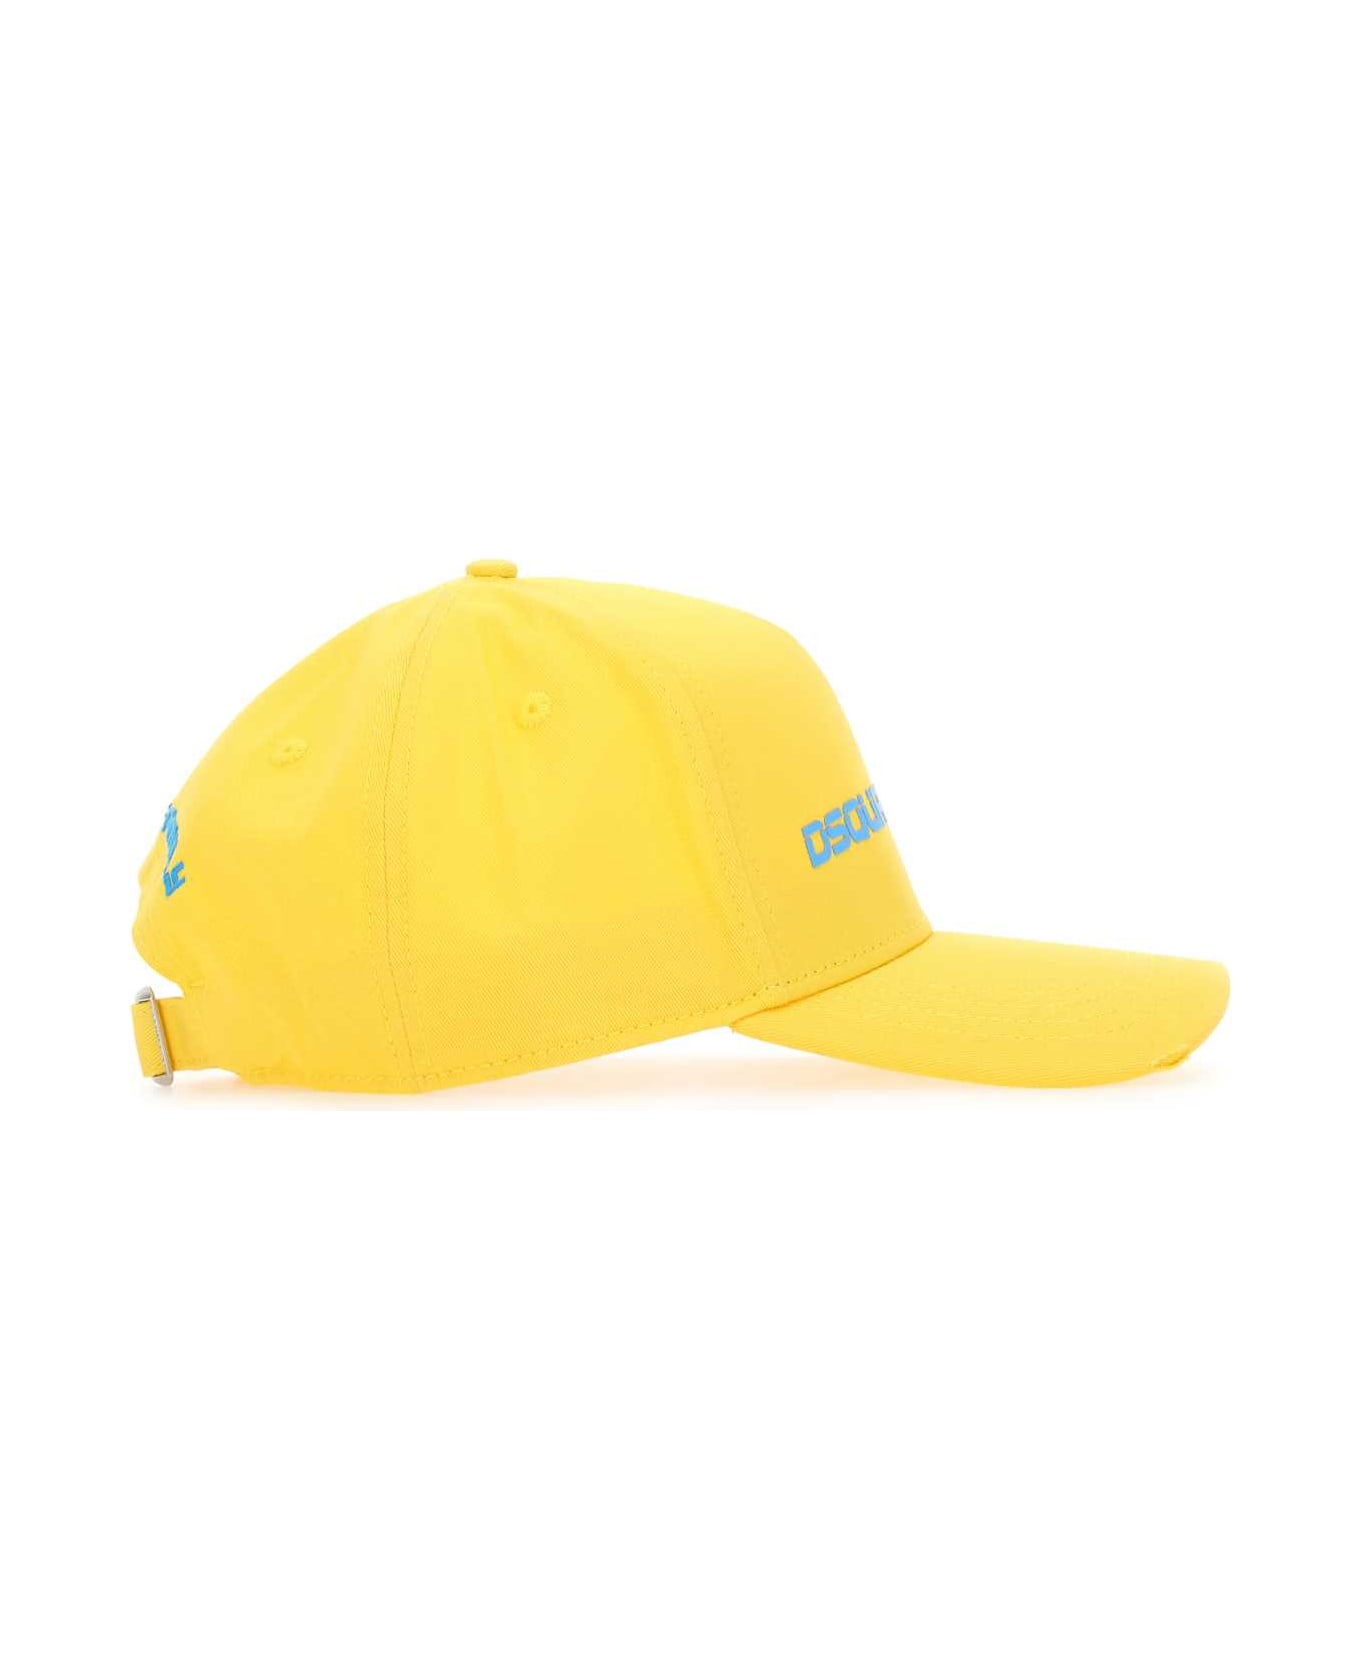 Dsquared2 Yellow Cotton Baseball Cap - YELLOW 帽子